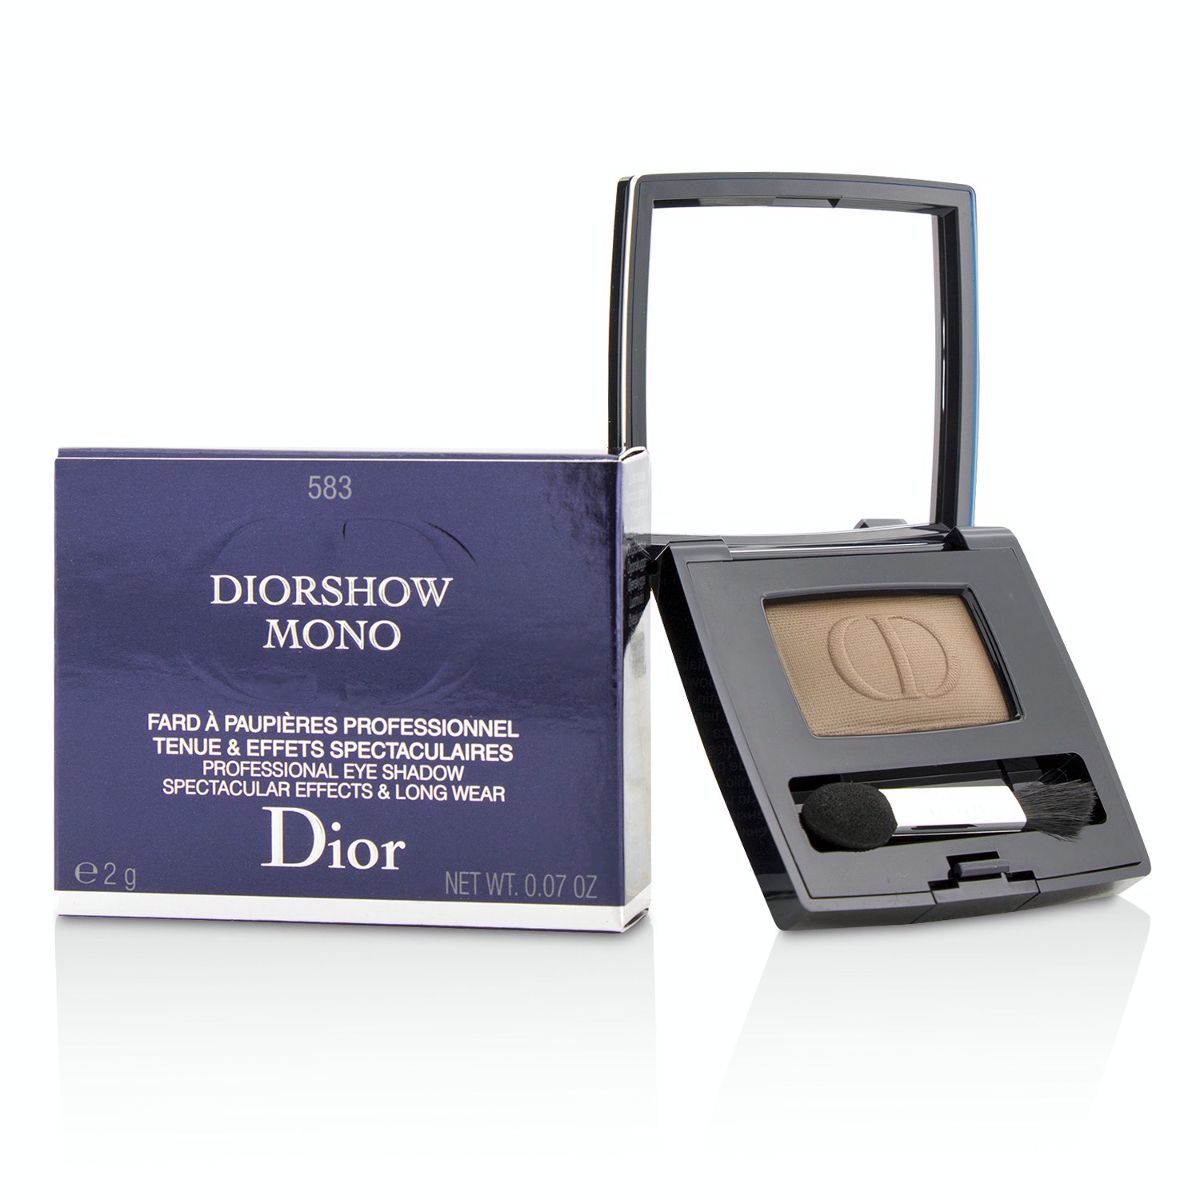 Diorshow Mono Professional Spectacular Effects  Long Wear Eyeshadow - # 583 Animal Christian Dior Image